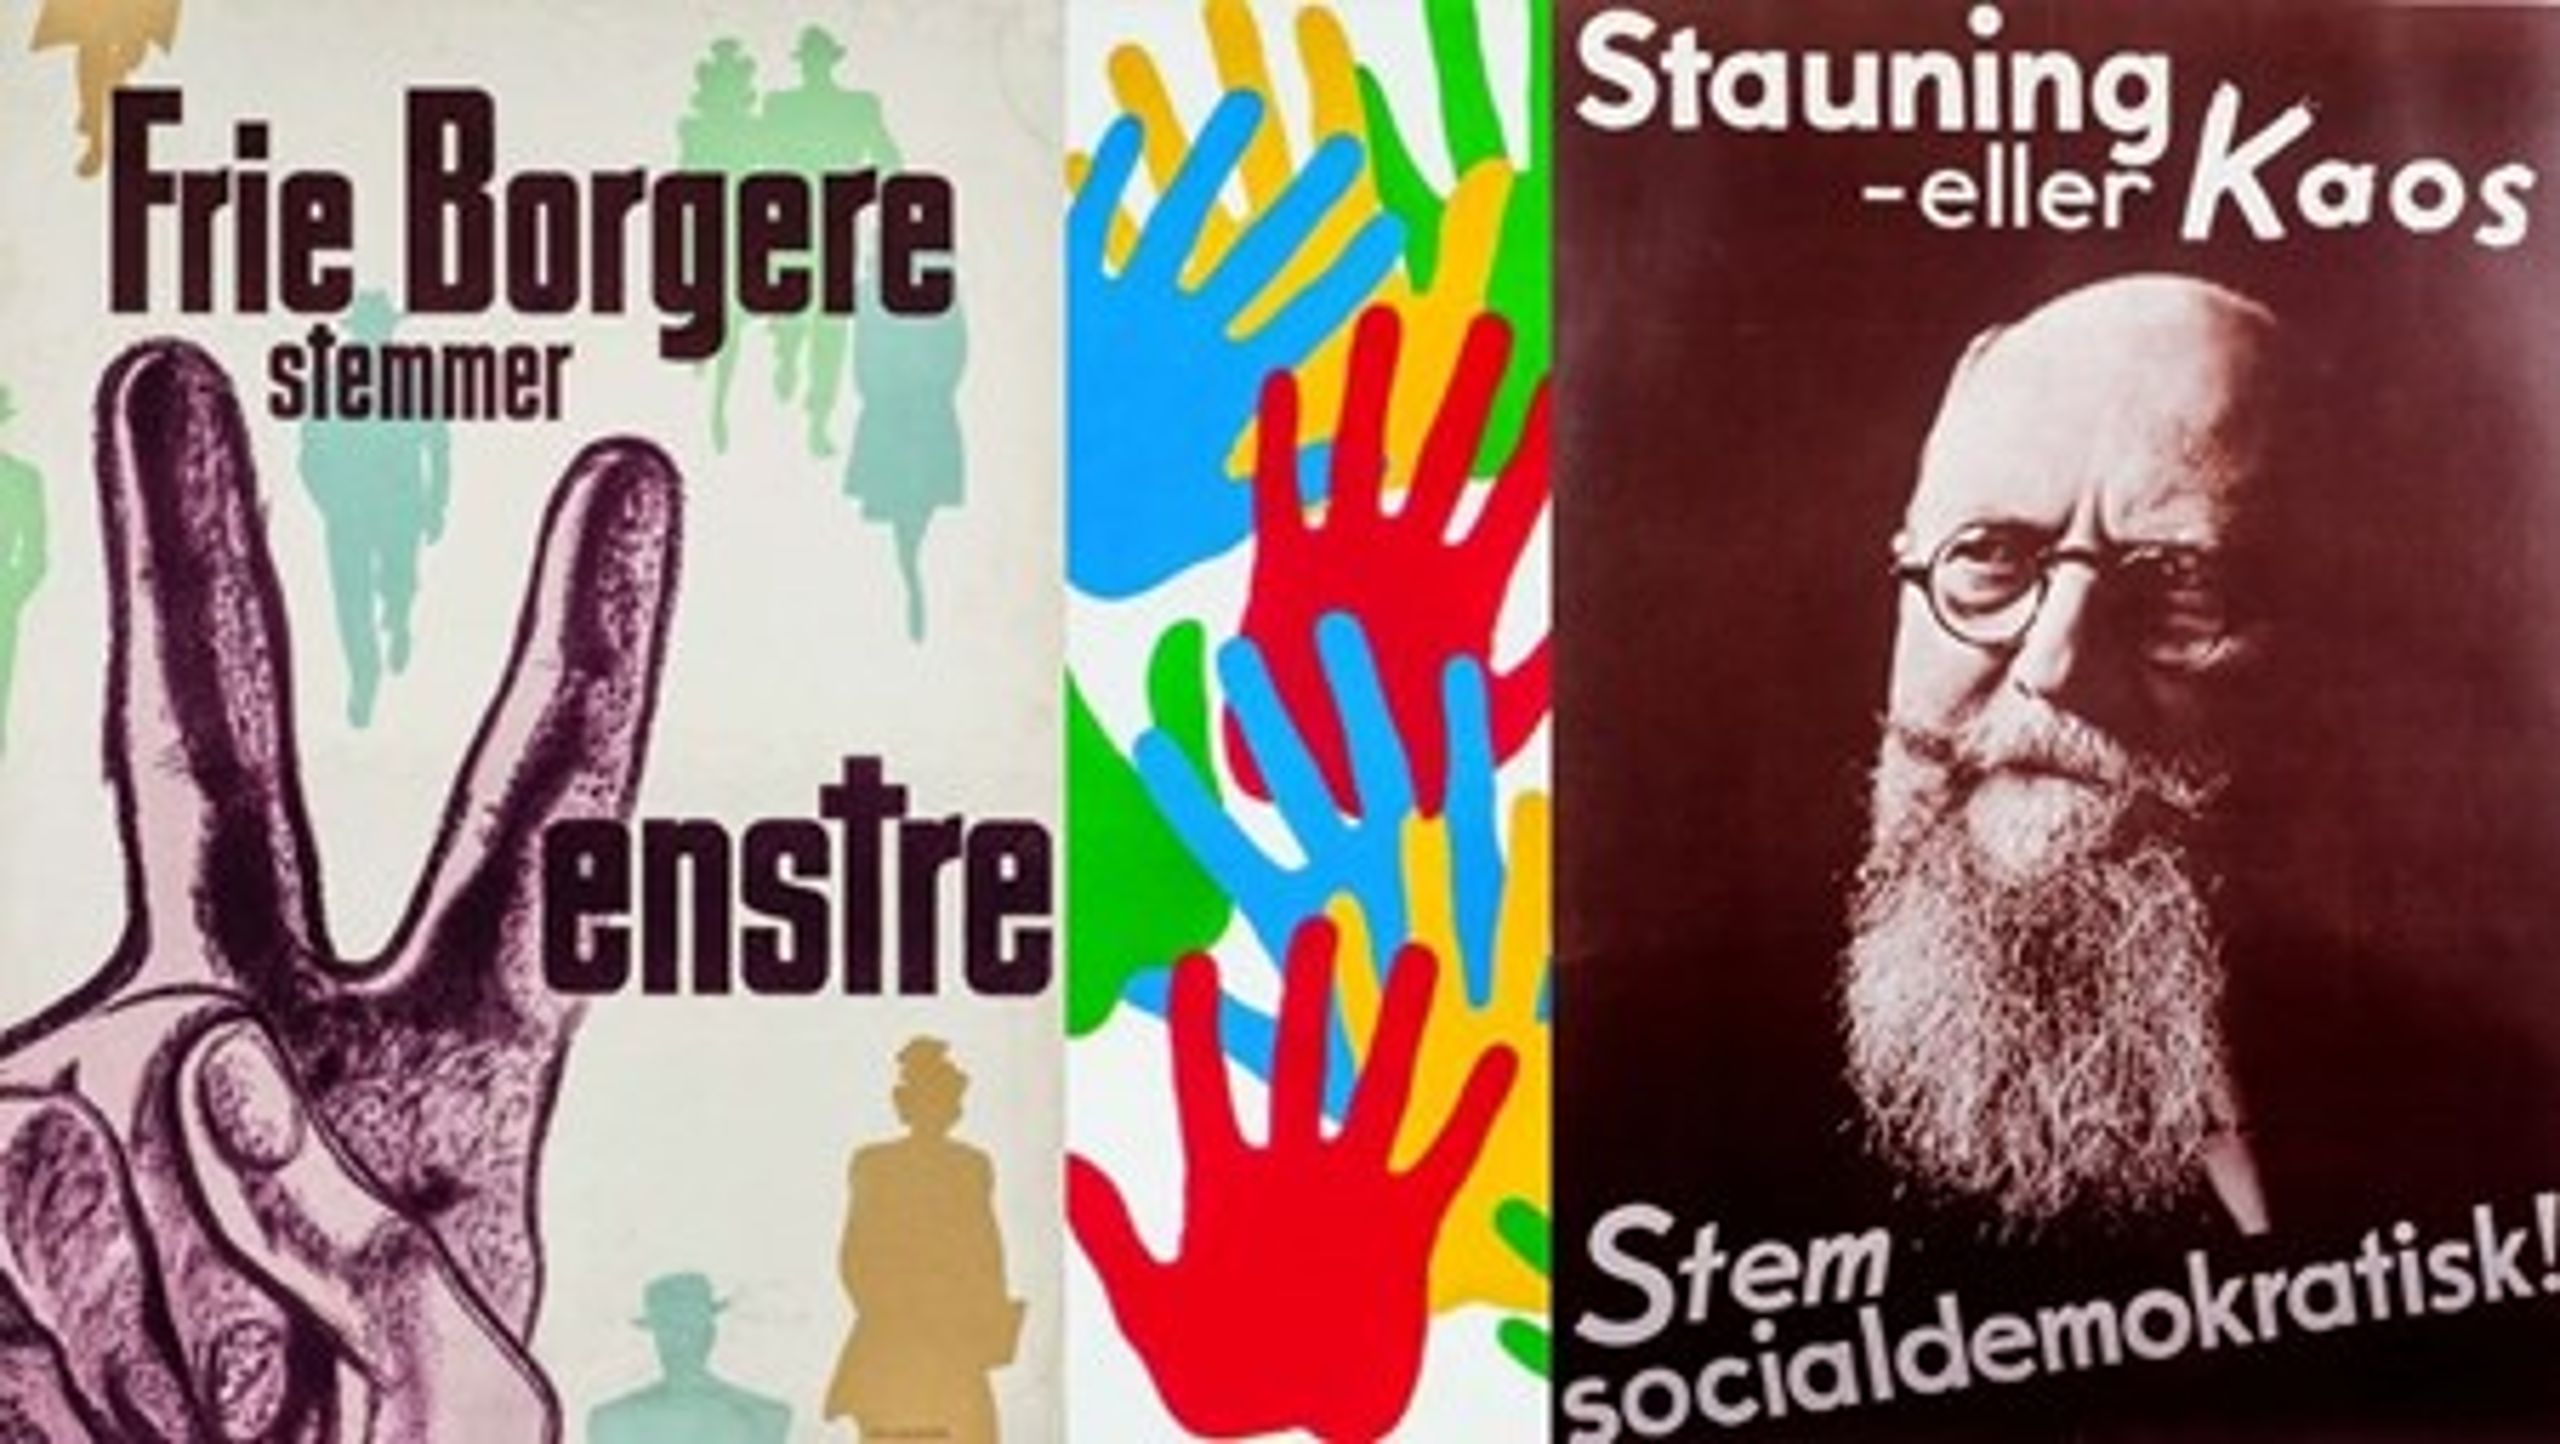 Eksempler på valgplakater, der vises på Dansk Plakatmuseum i Den gamle By i Aarhus hen over årets kommende&nbsp;valgdato.